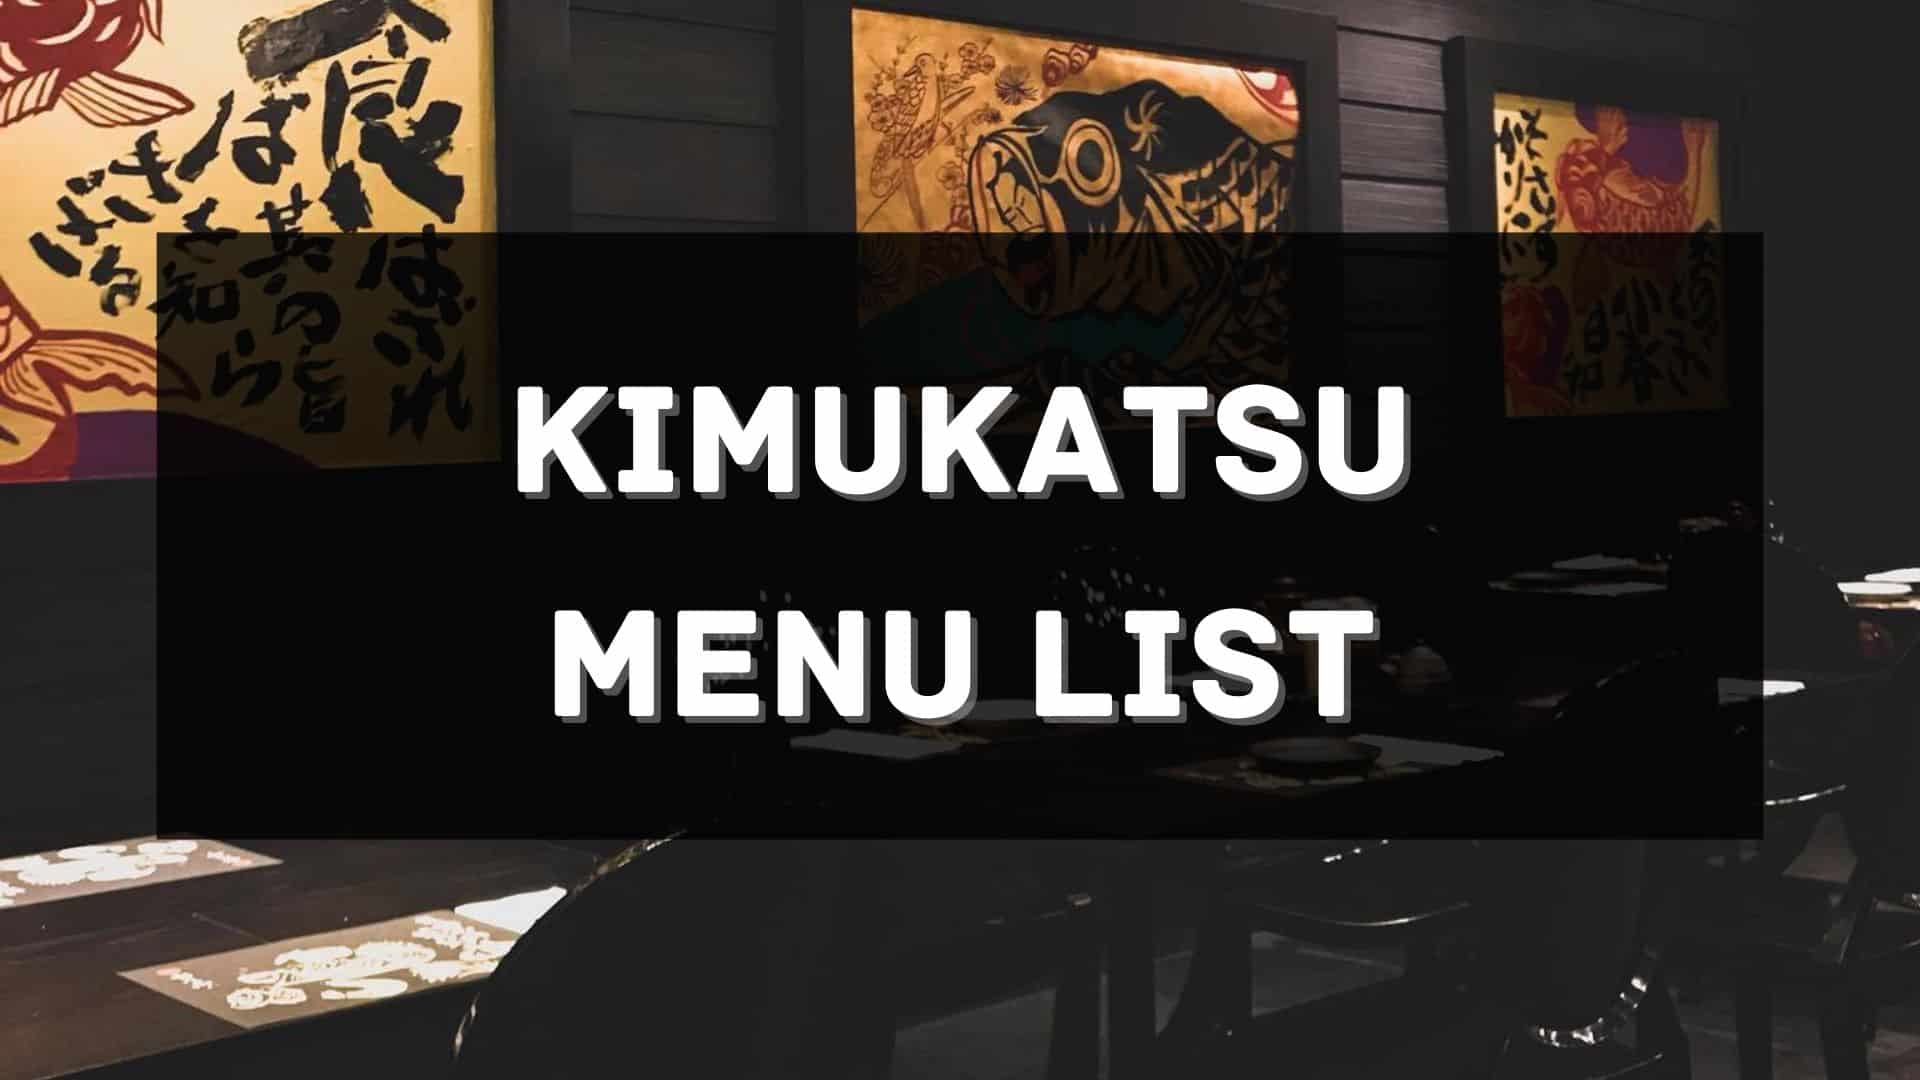 kimukatsu menu prices philippines